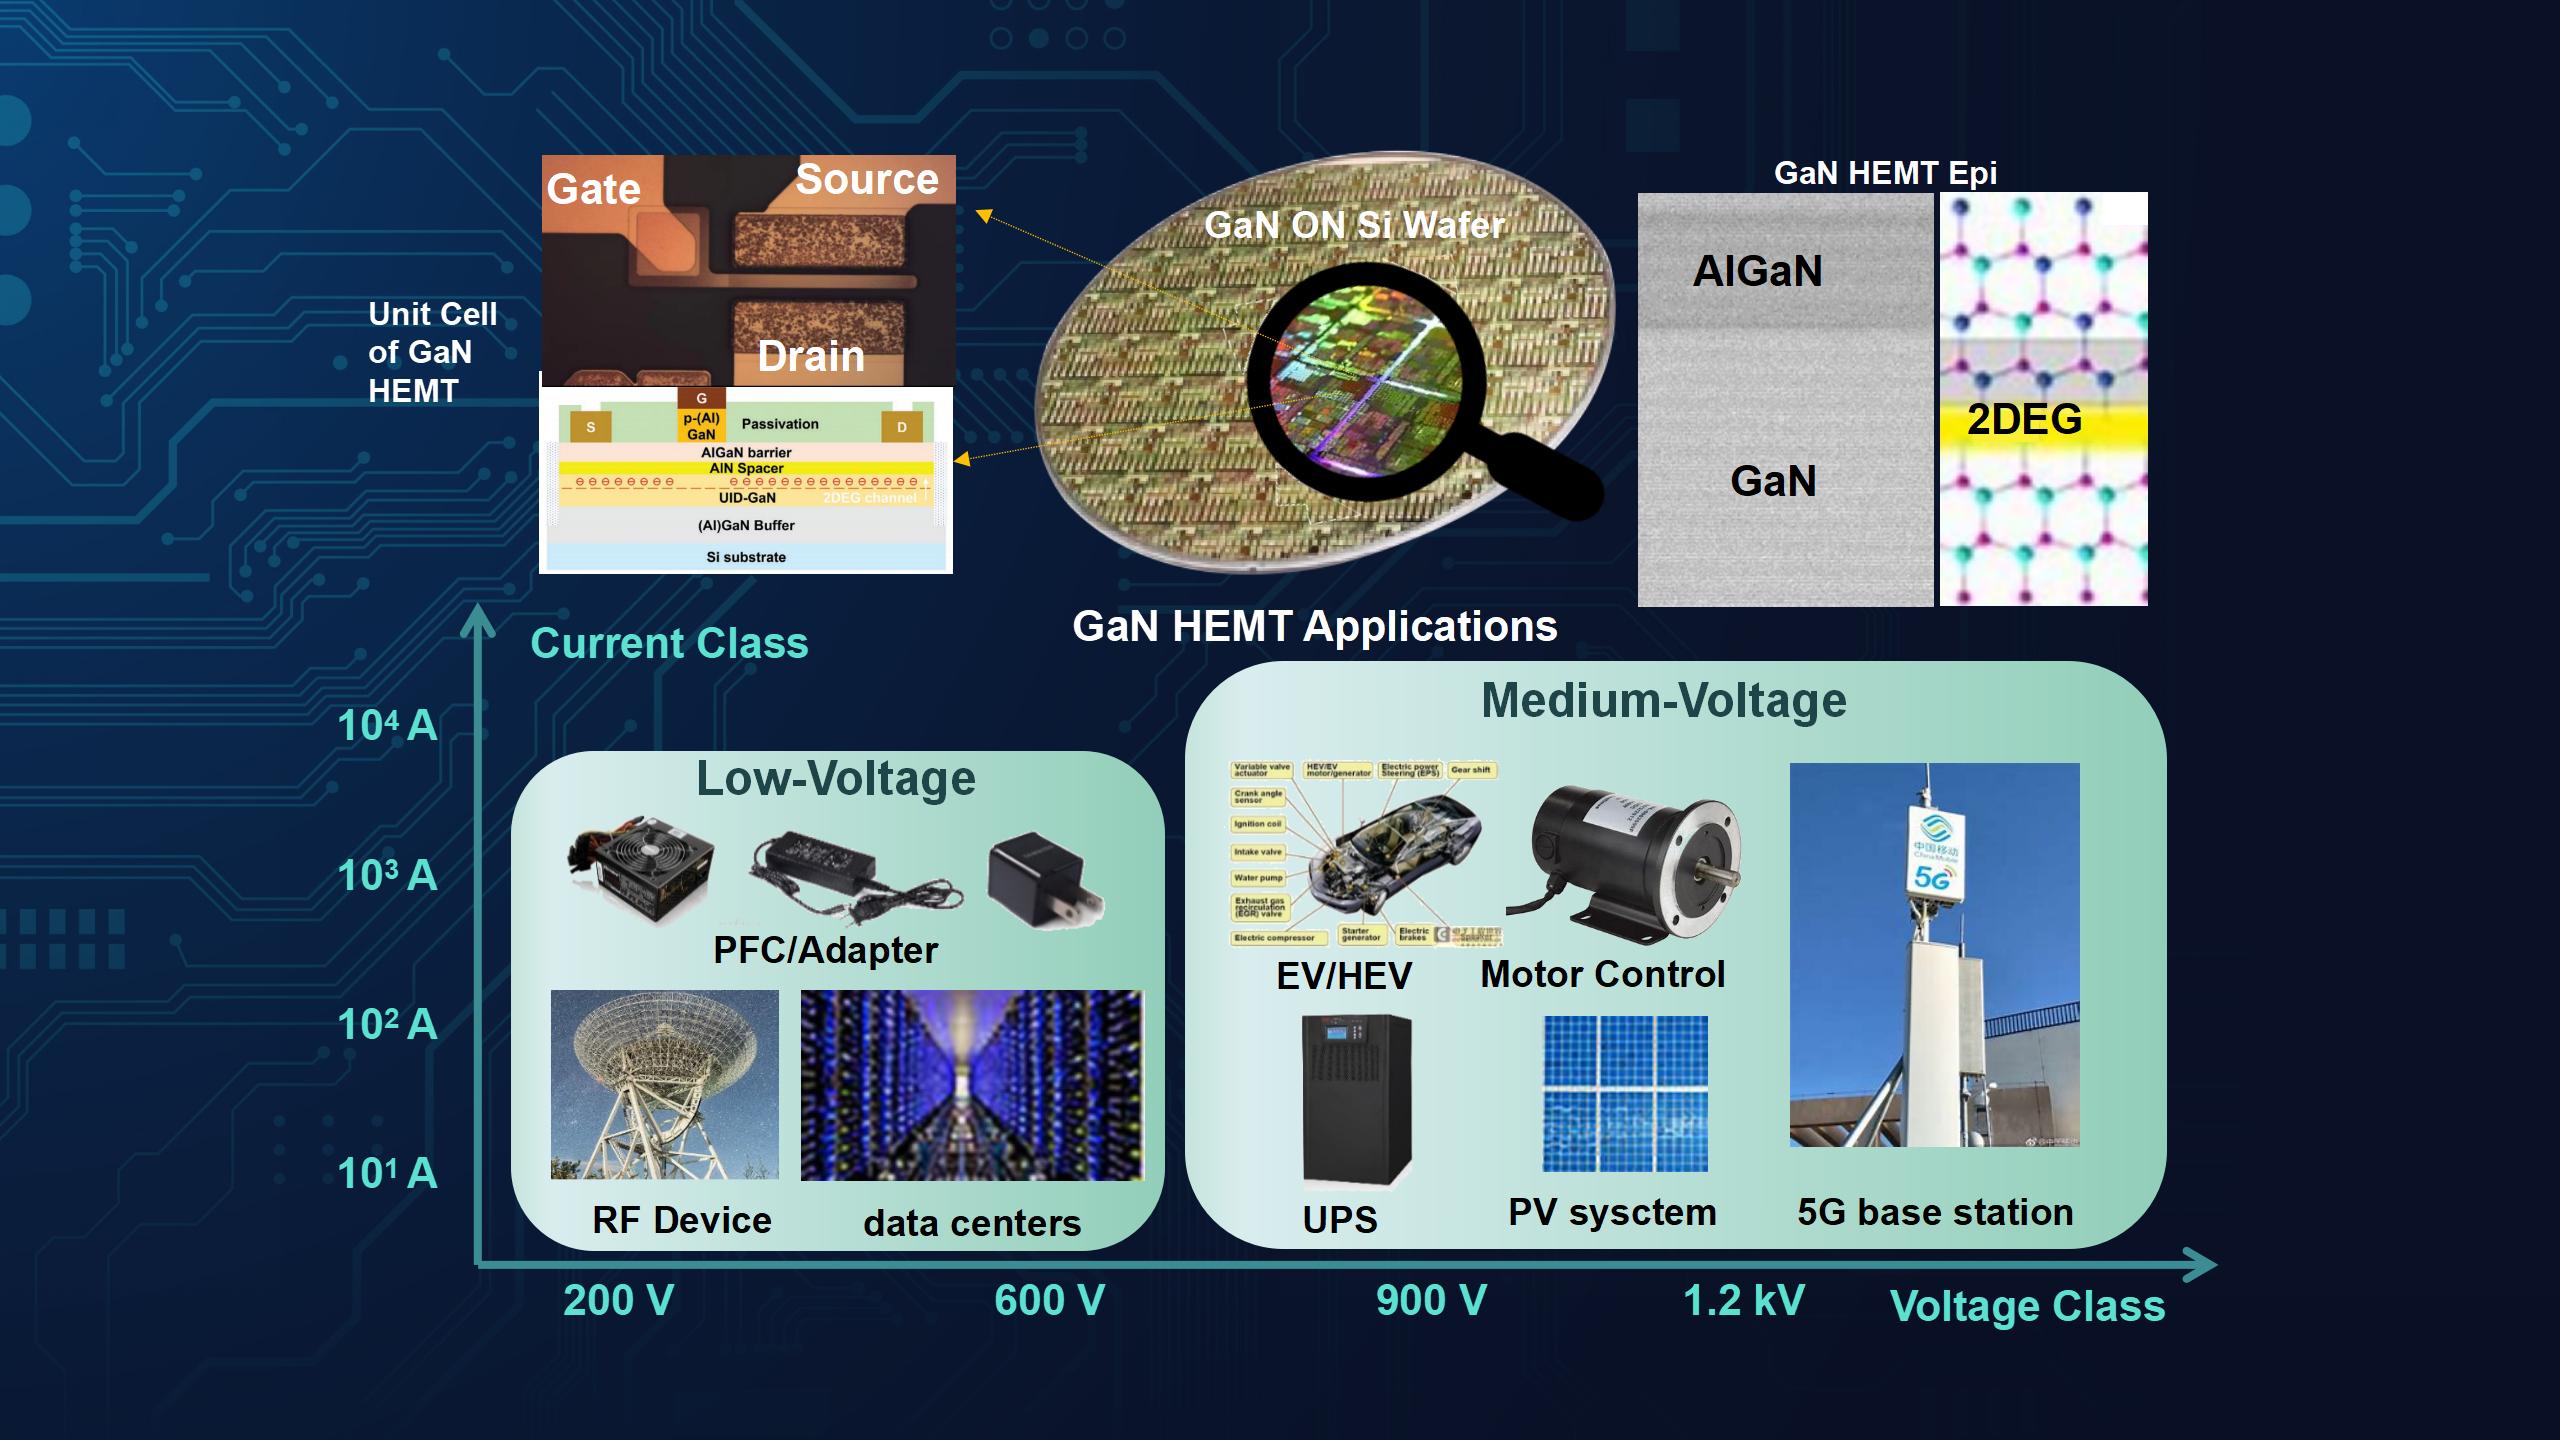 Researchers publish series of progresses in GaN transistors